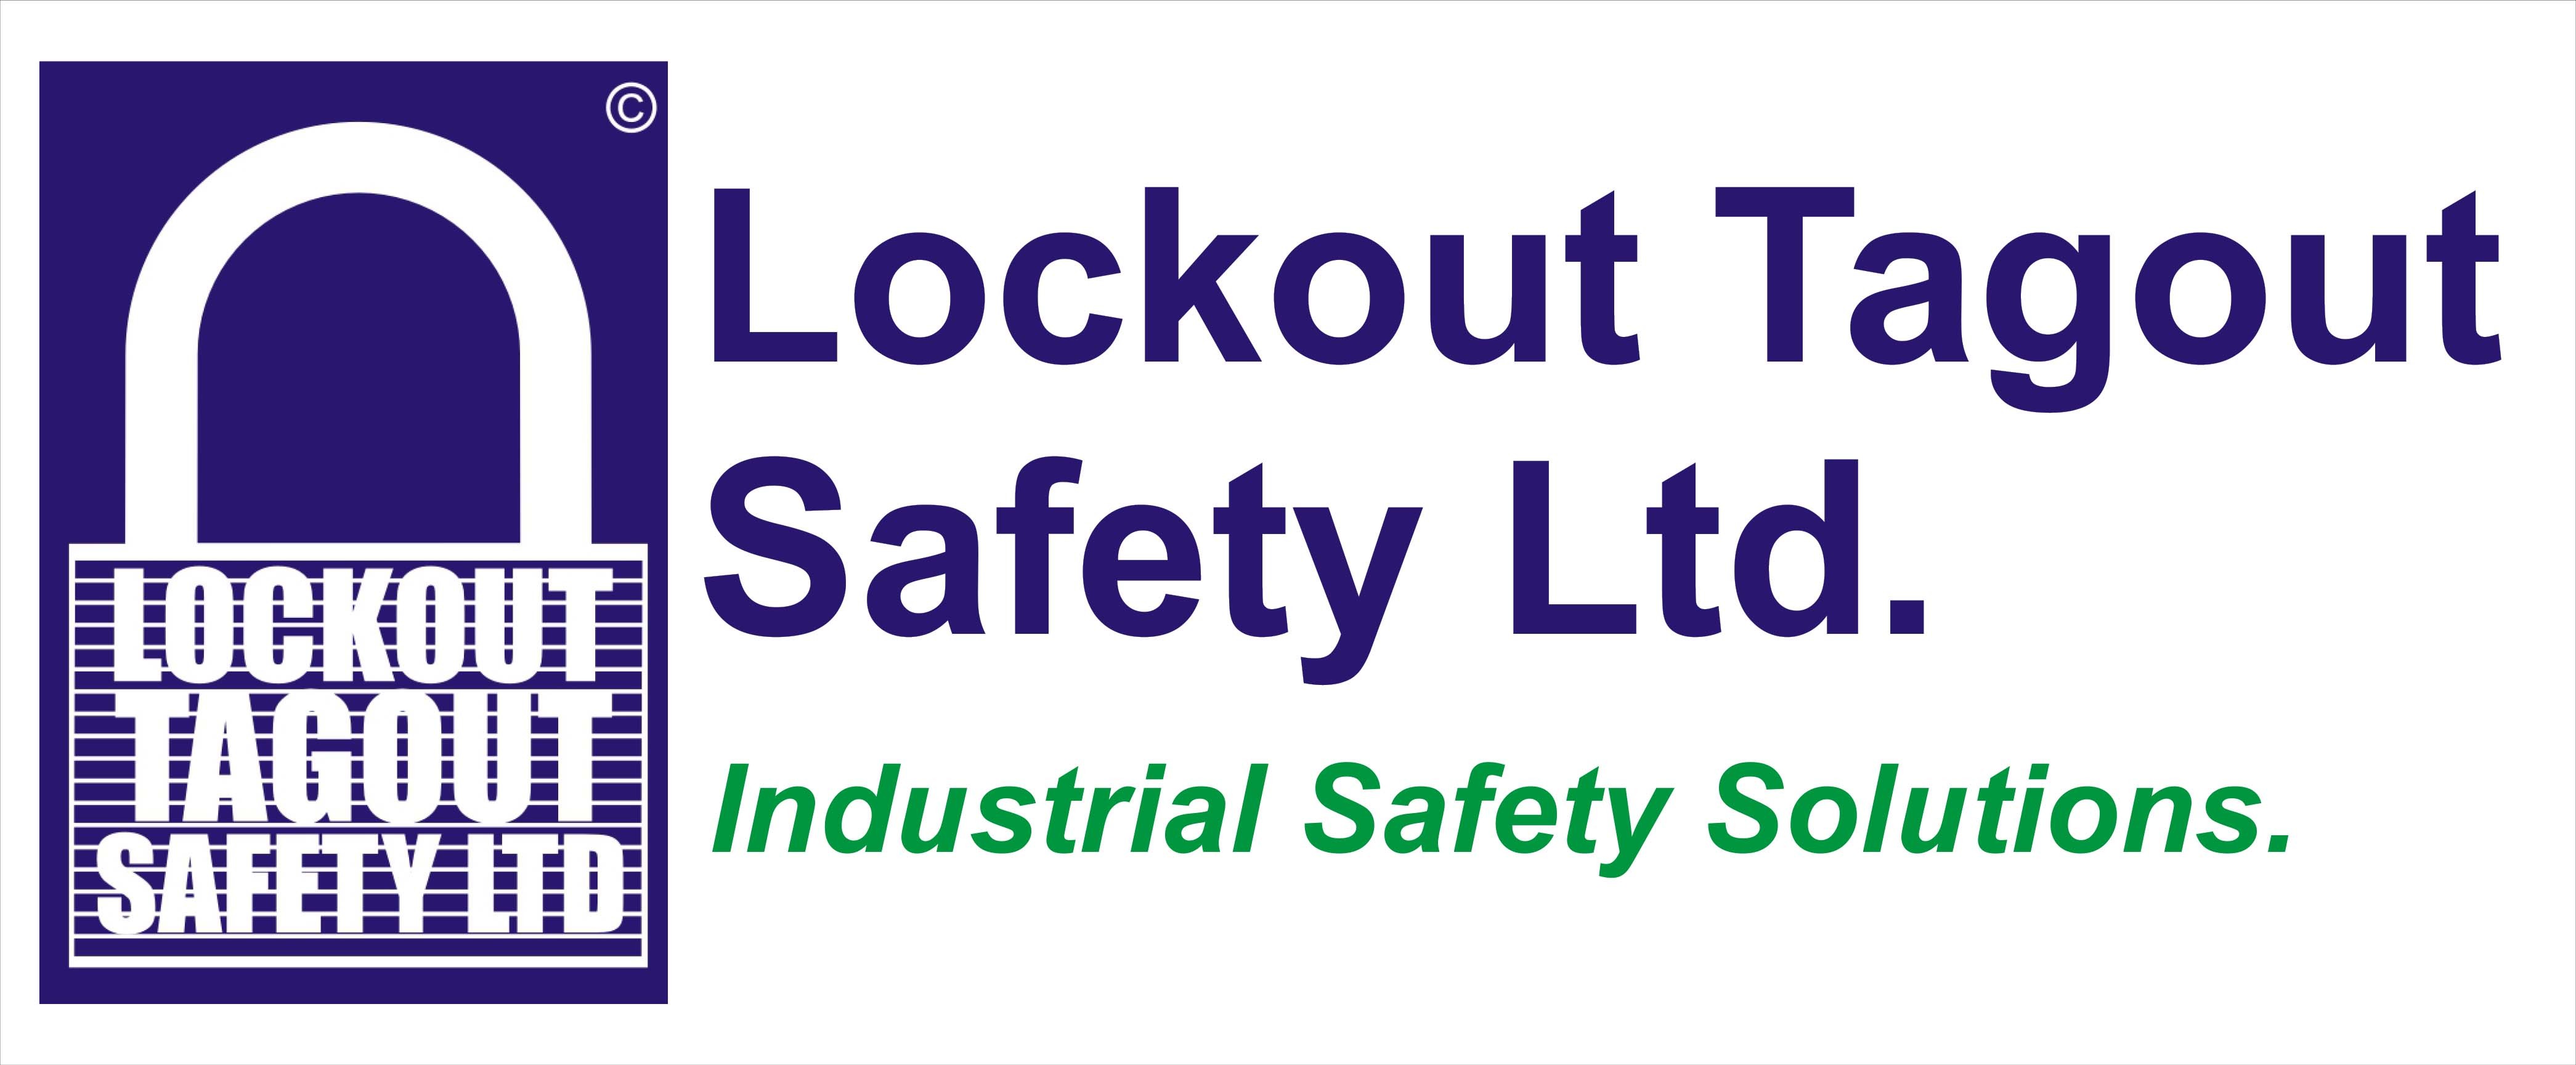 LOCKOUT TAGOUT SAFETY LTD